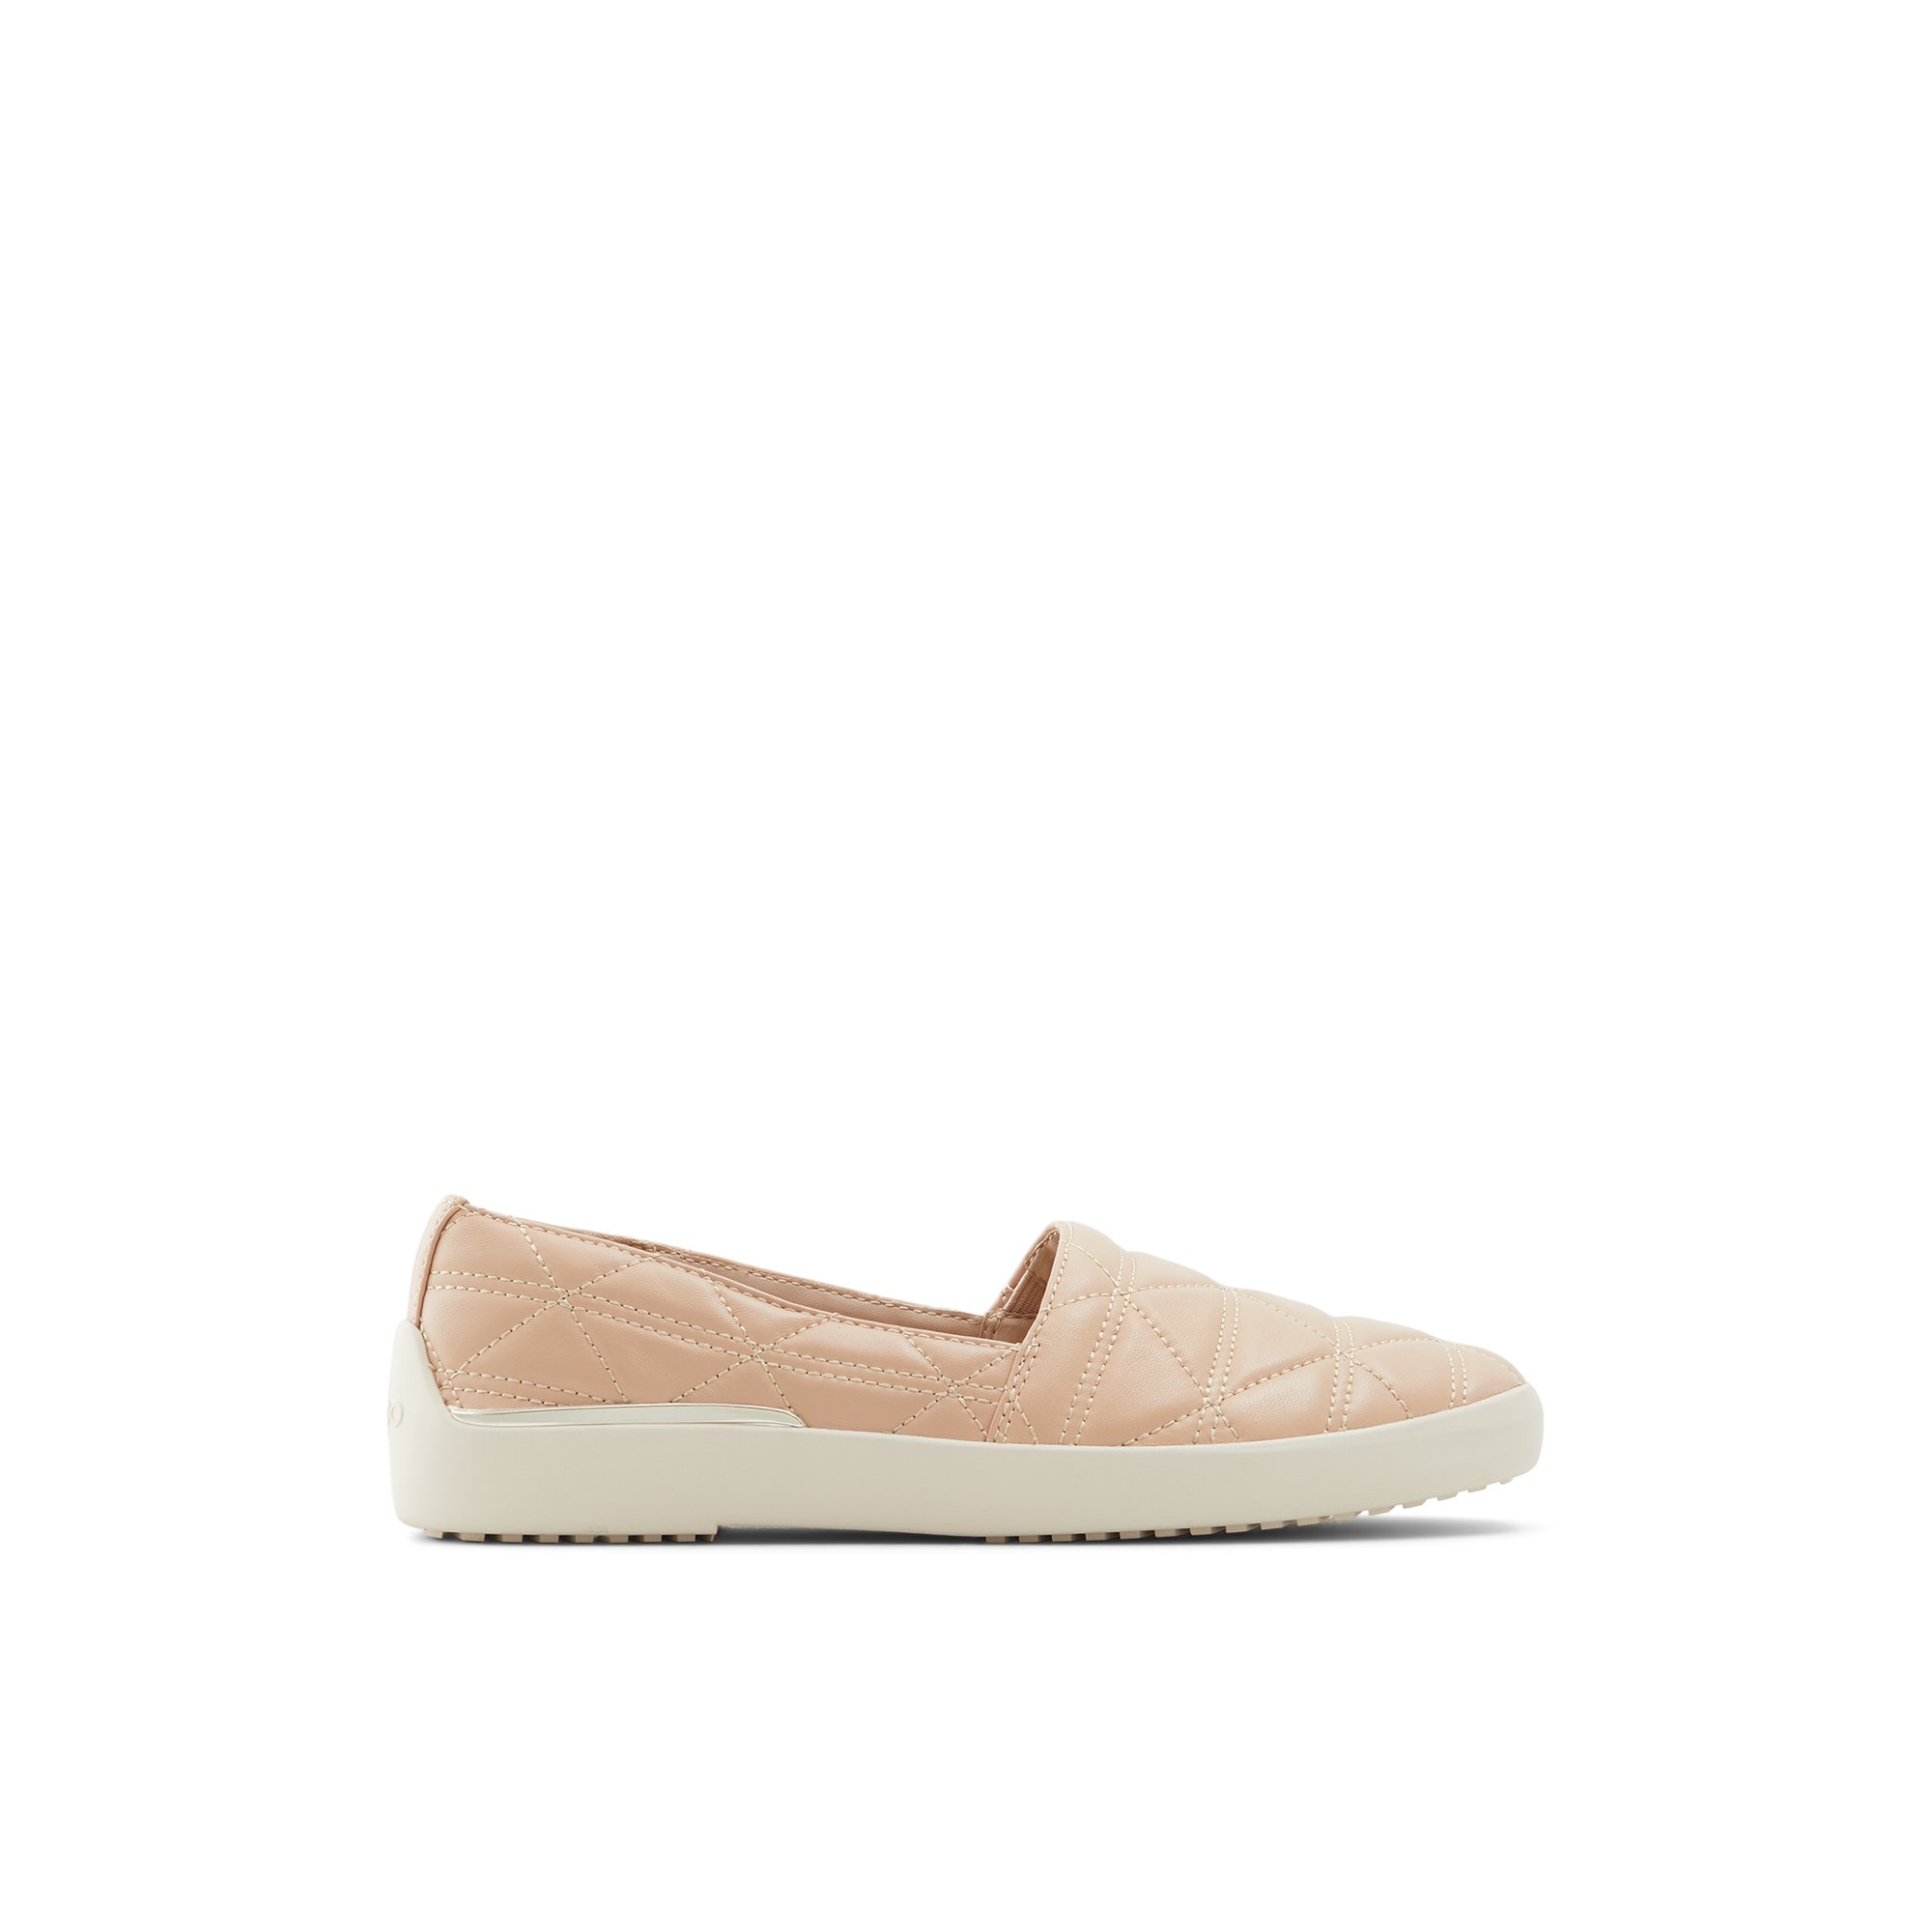 Image of ALDO Quilten - Women's Loafer Flats - Beige, Size 5